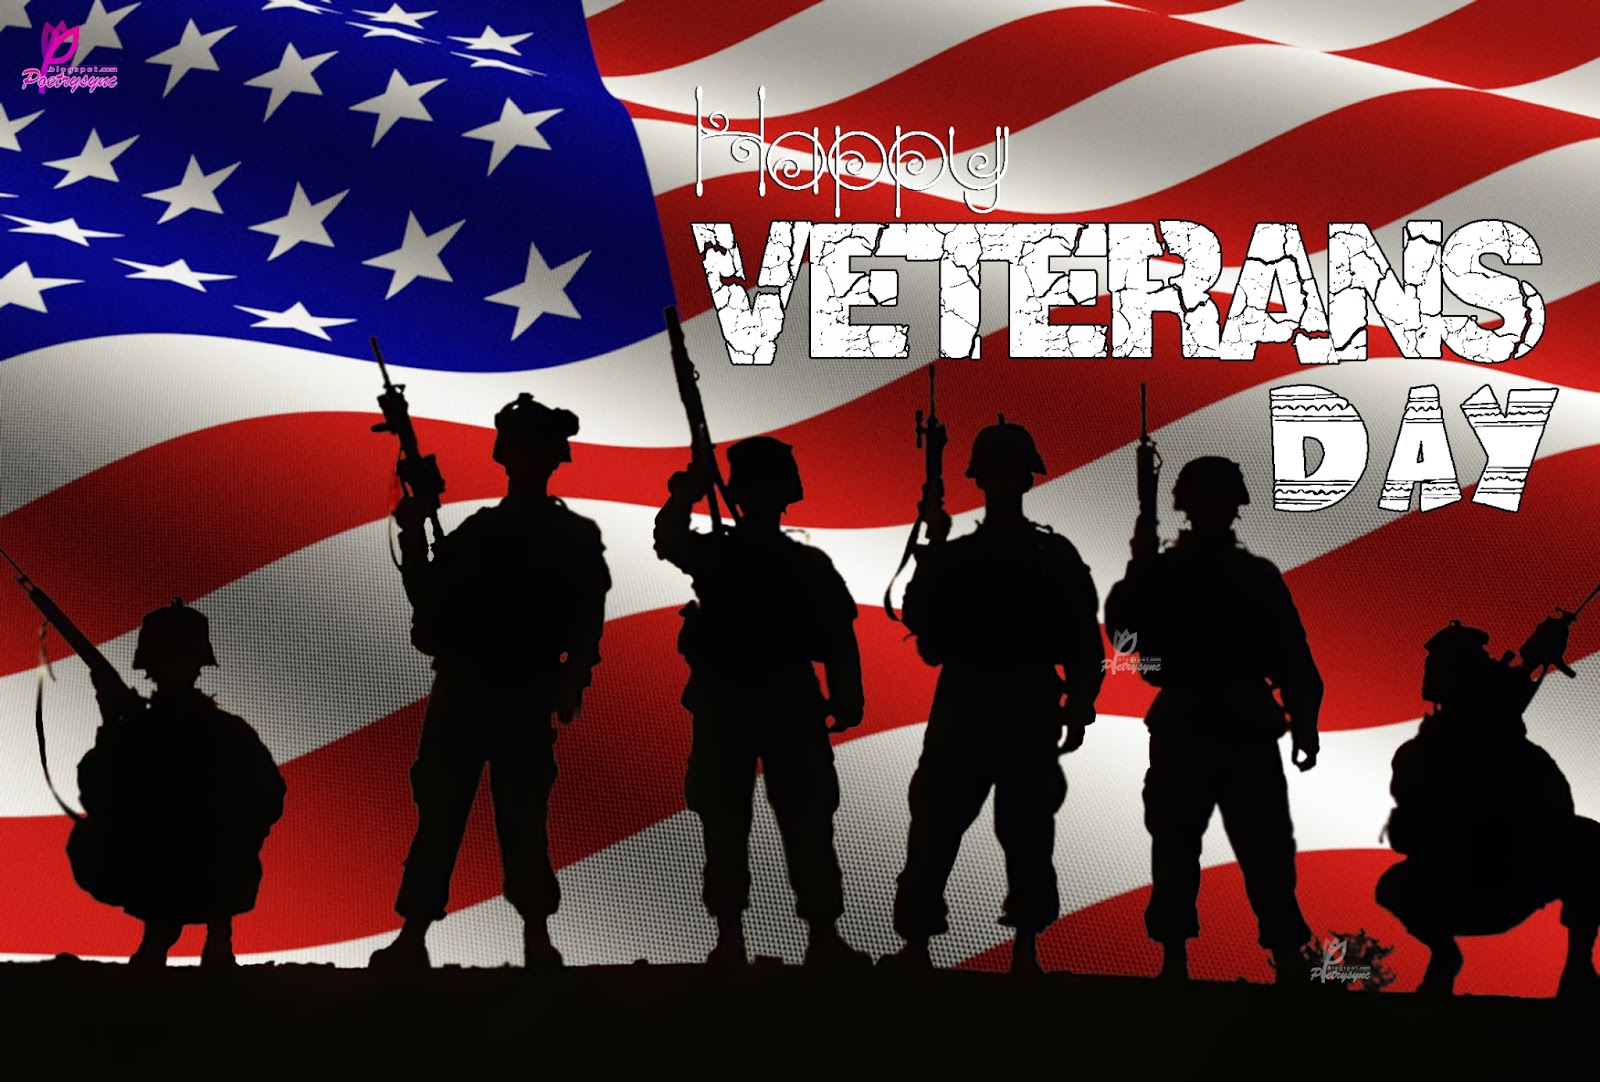 Happy Veterans Day Thank You Wallpaper
veterans Day - Us Army Veteran Day - HD Wallpaper 